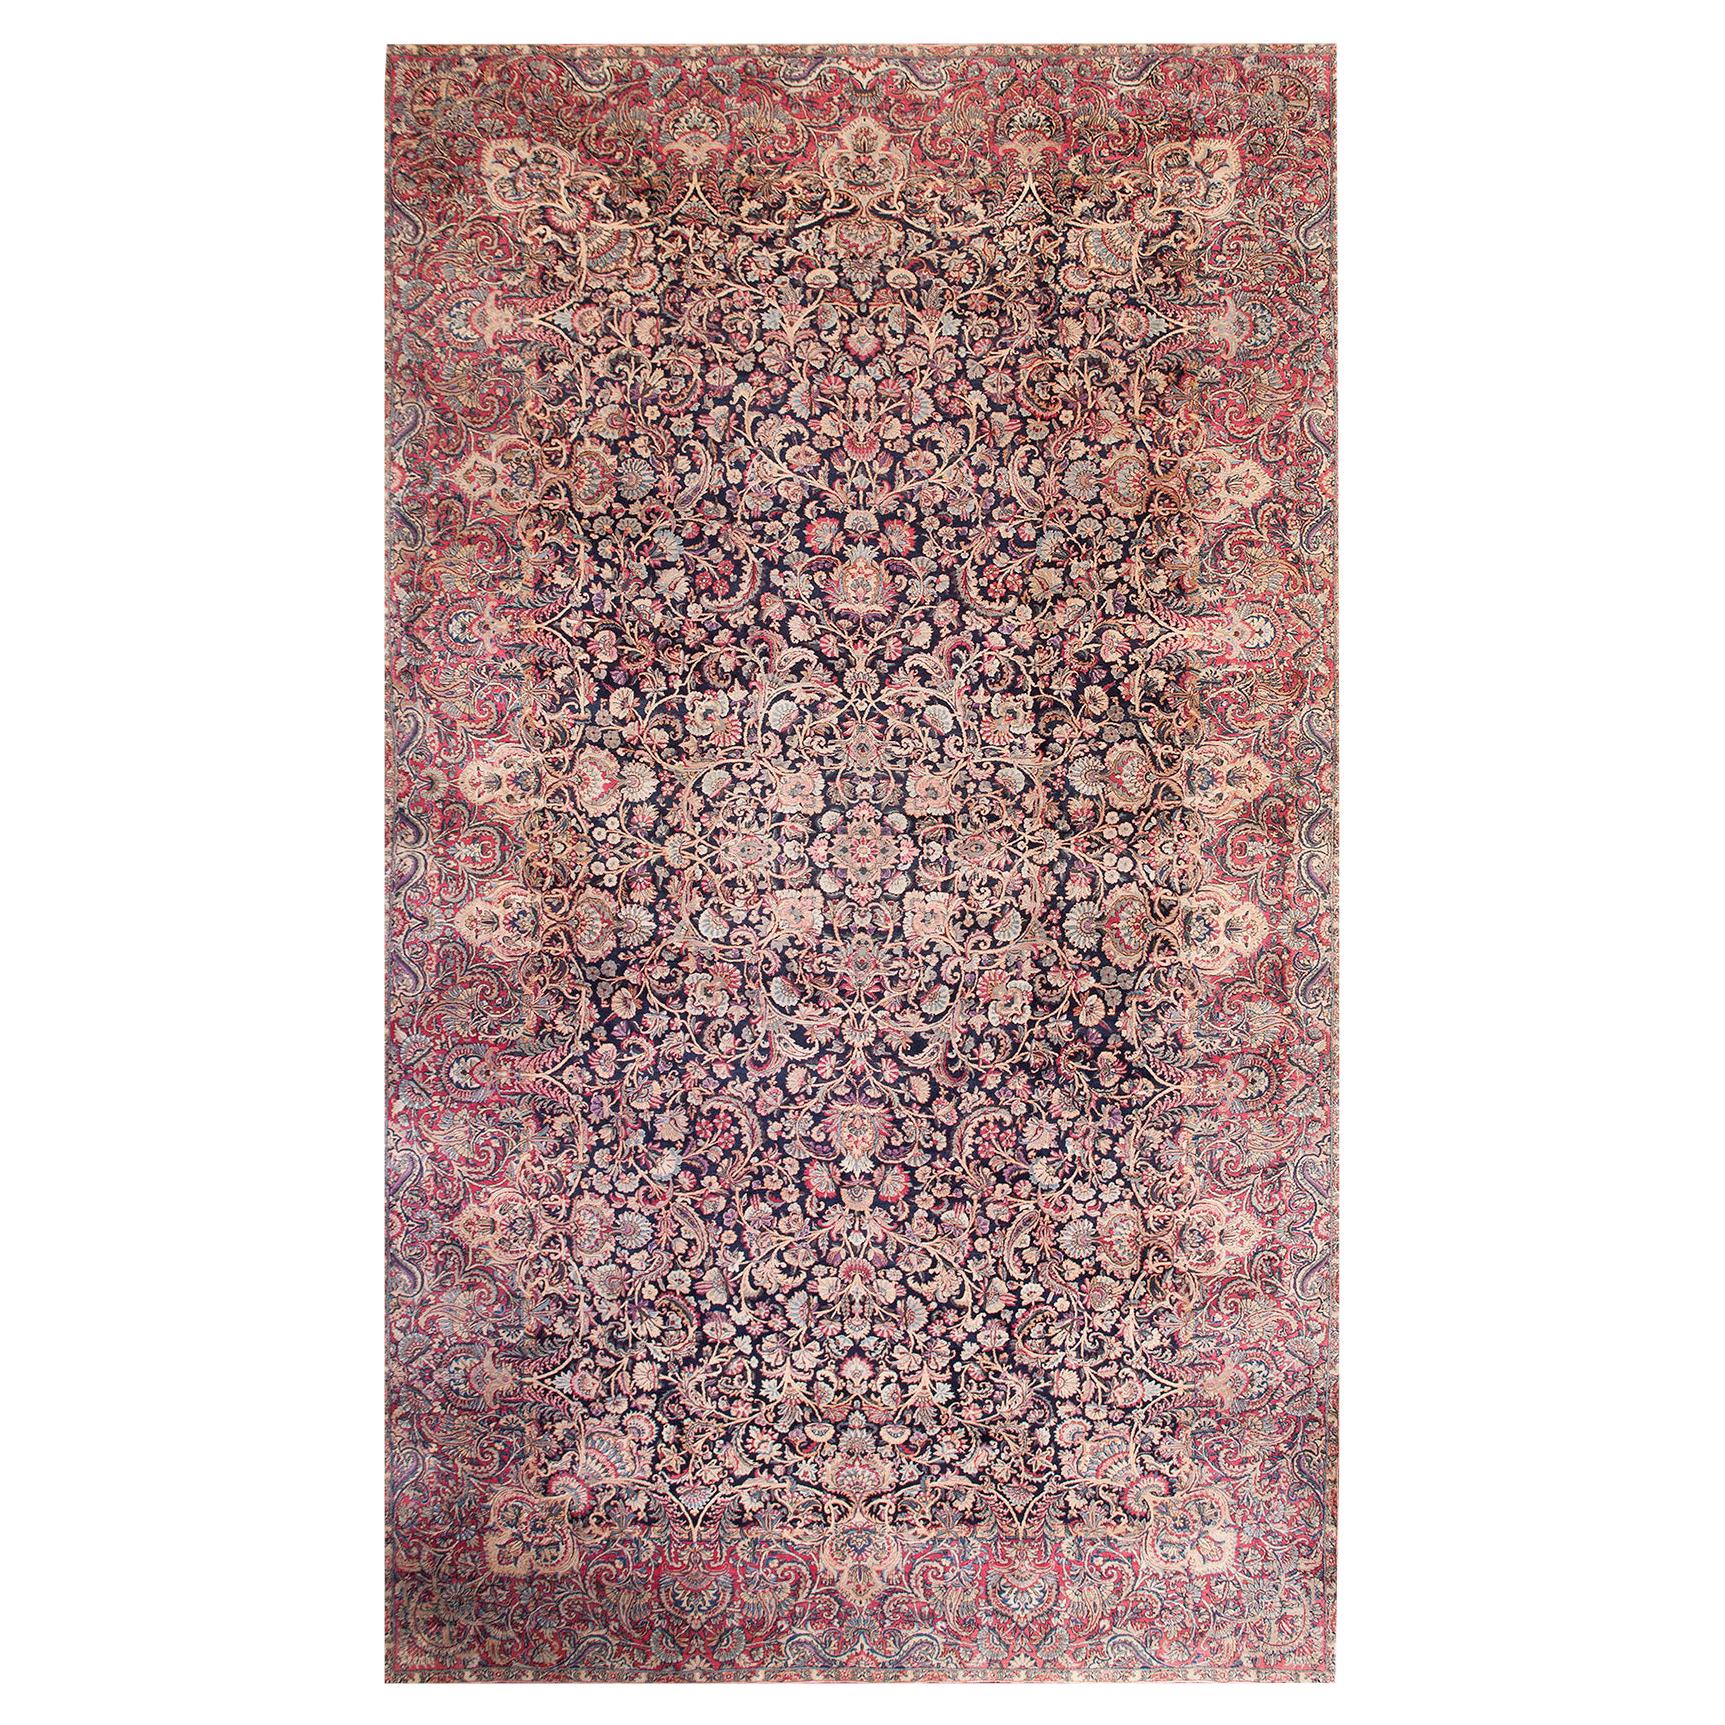 Early 20th Century S.E. Persian Kirman Carpet ( 9'10" x 17'8" - 300 x 538 ) For Sale